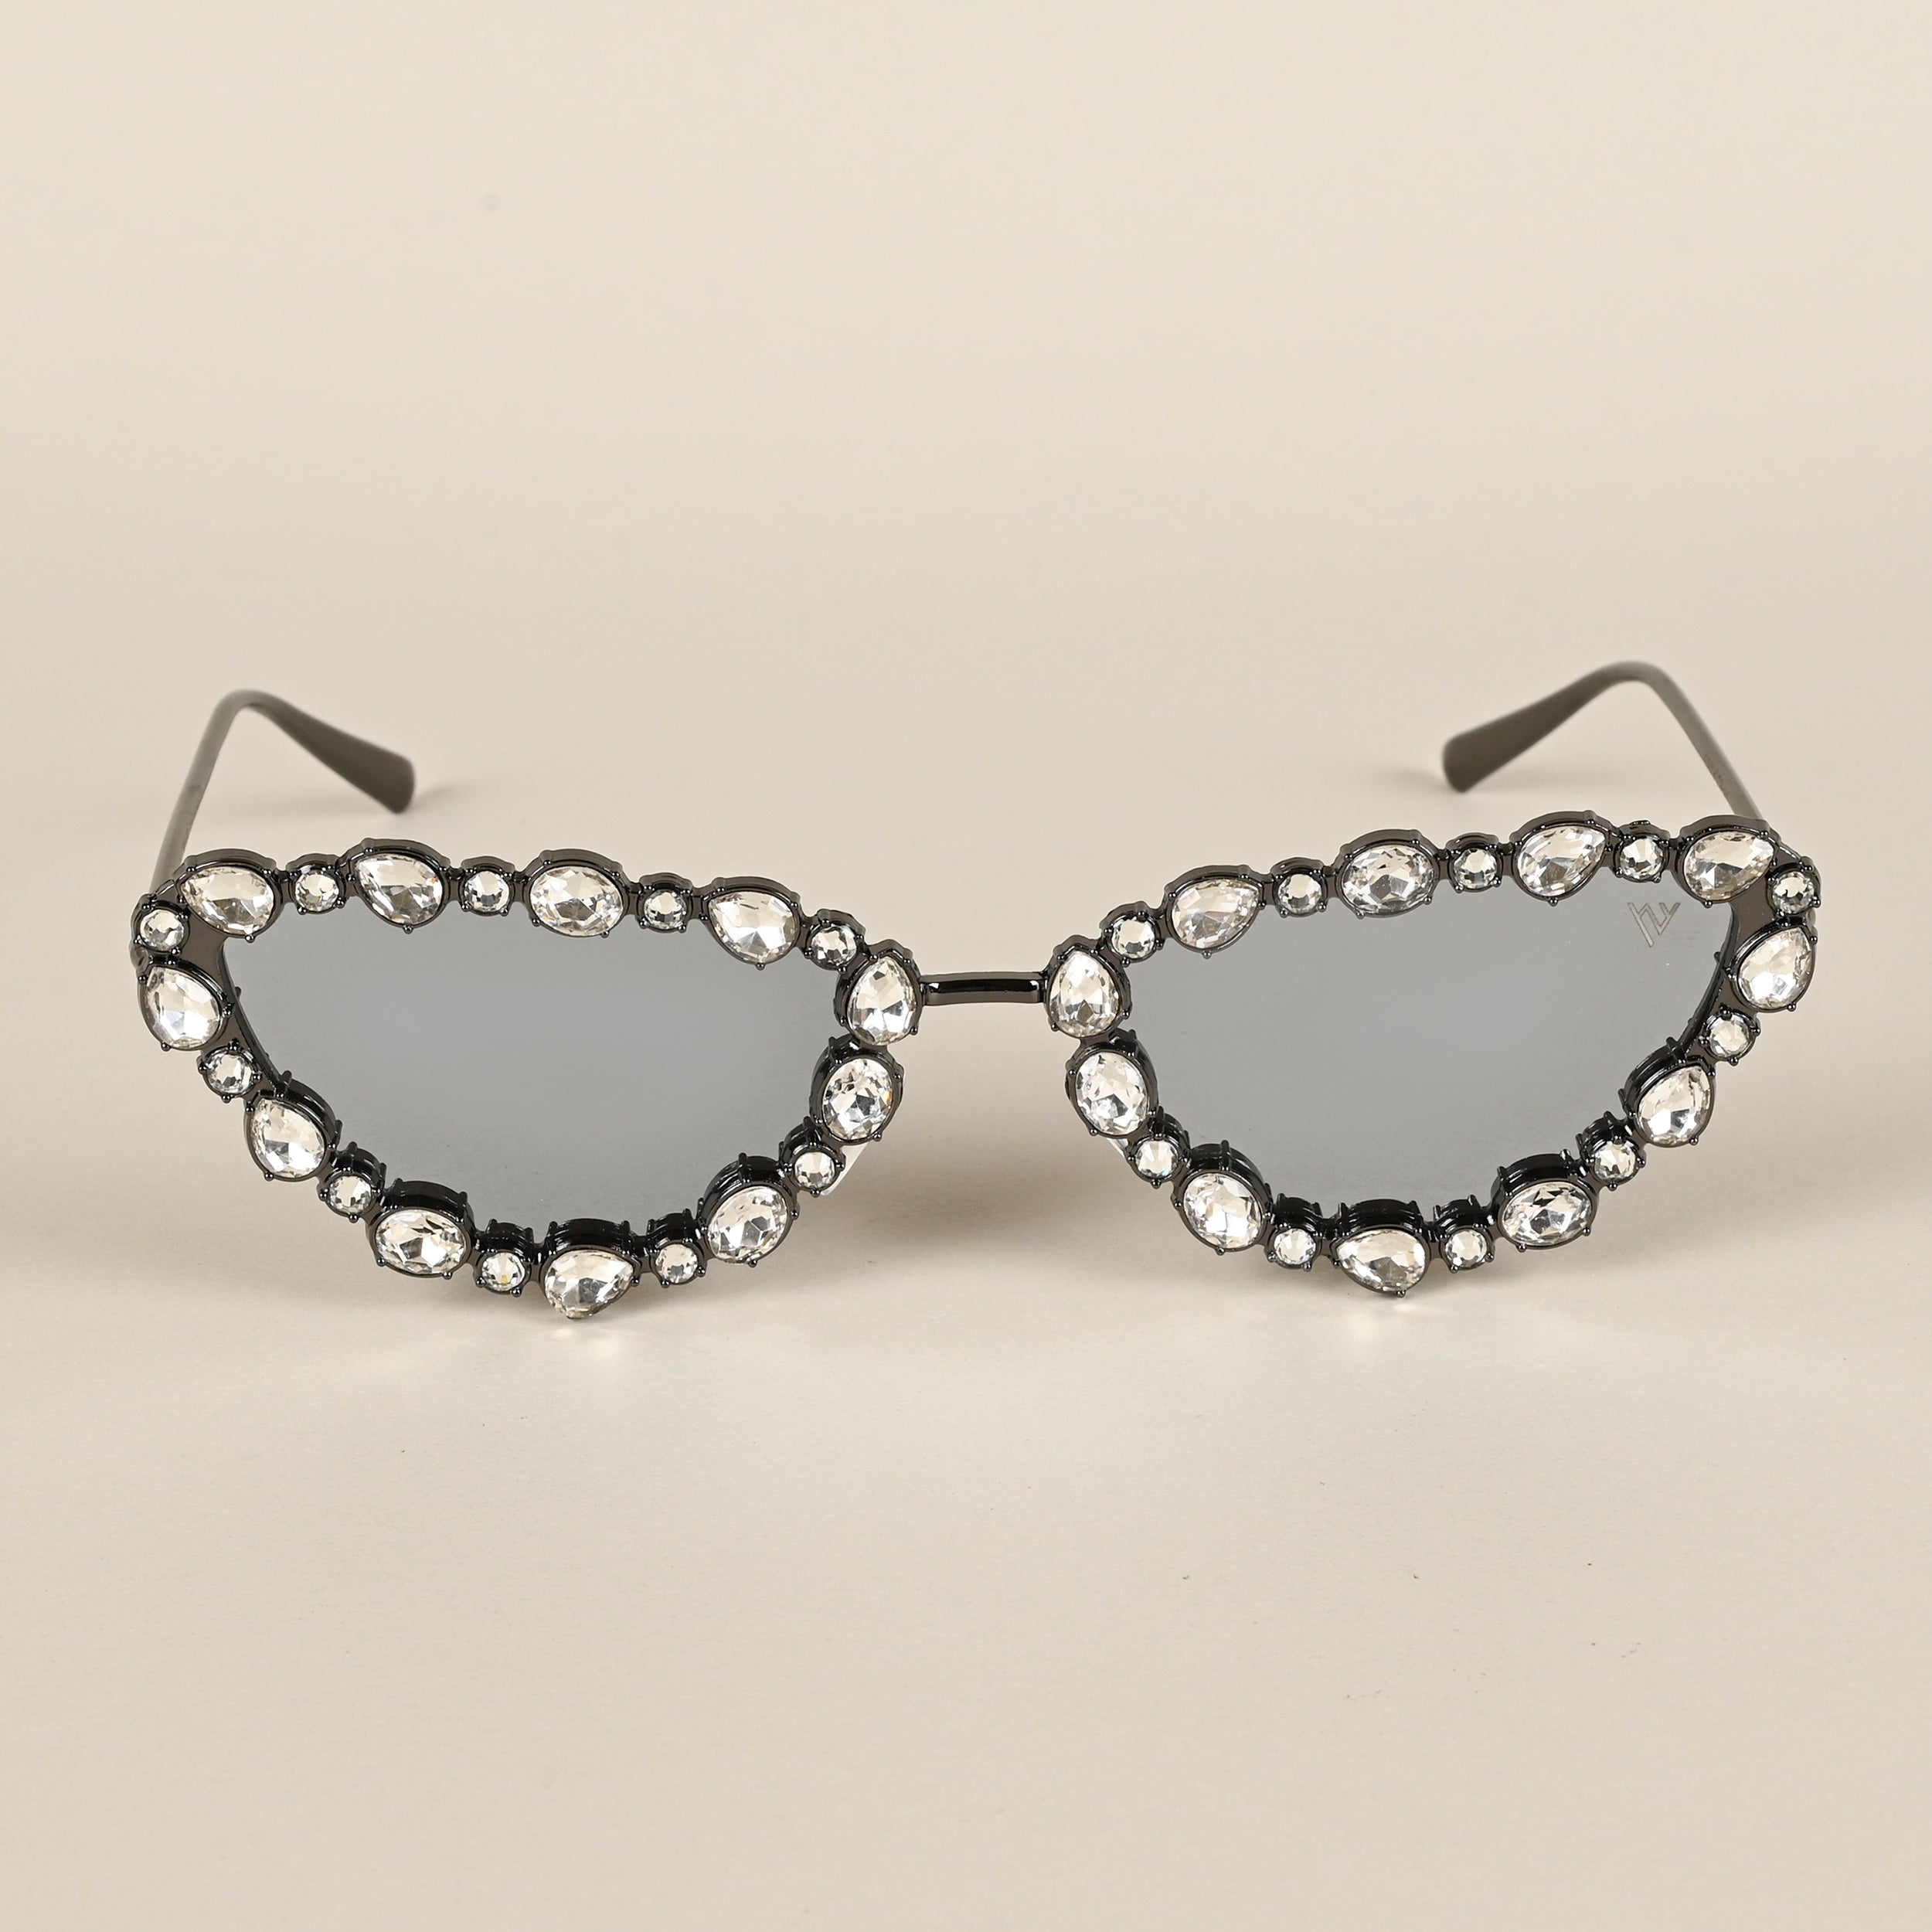 Voyage Grey Cateye Sunglasses for Women (3562MG4131)